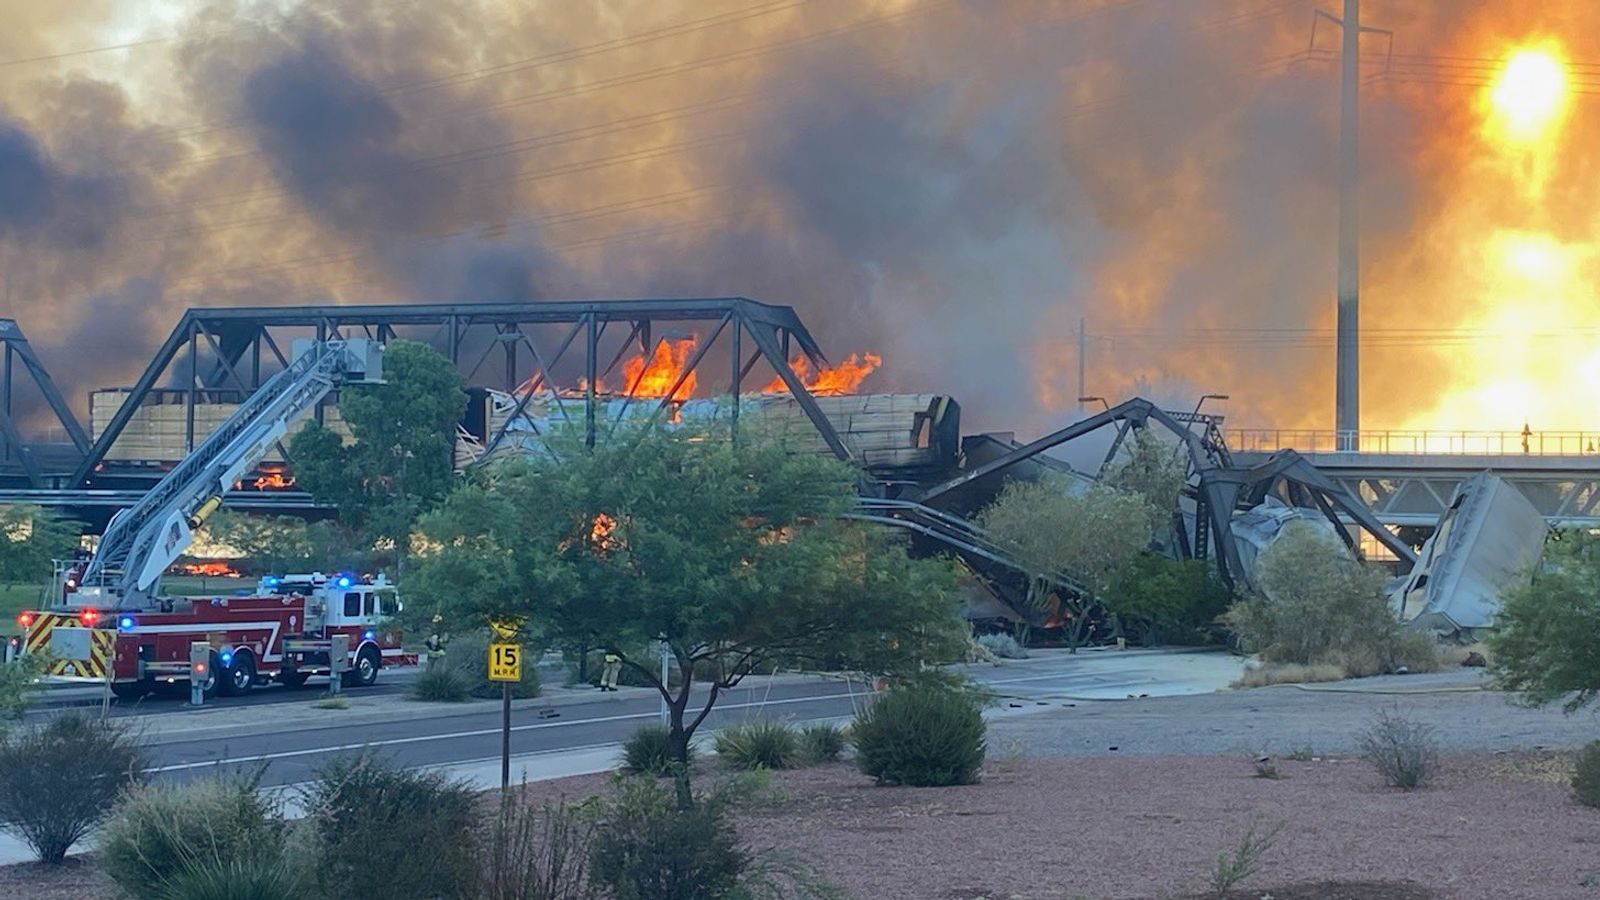 Arizona: Train catches fire after derailment - causing partial collapse of bridge...